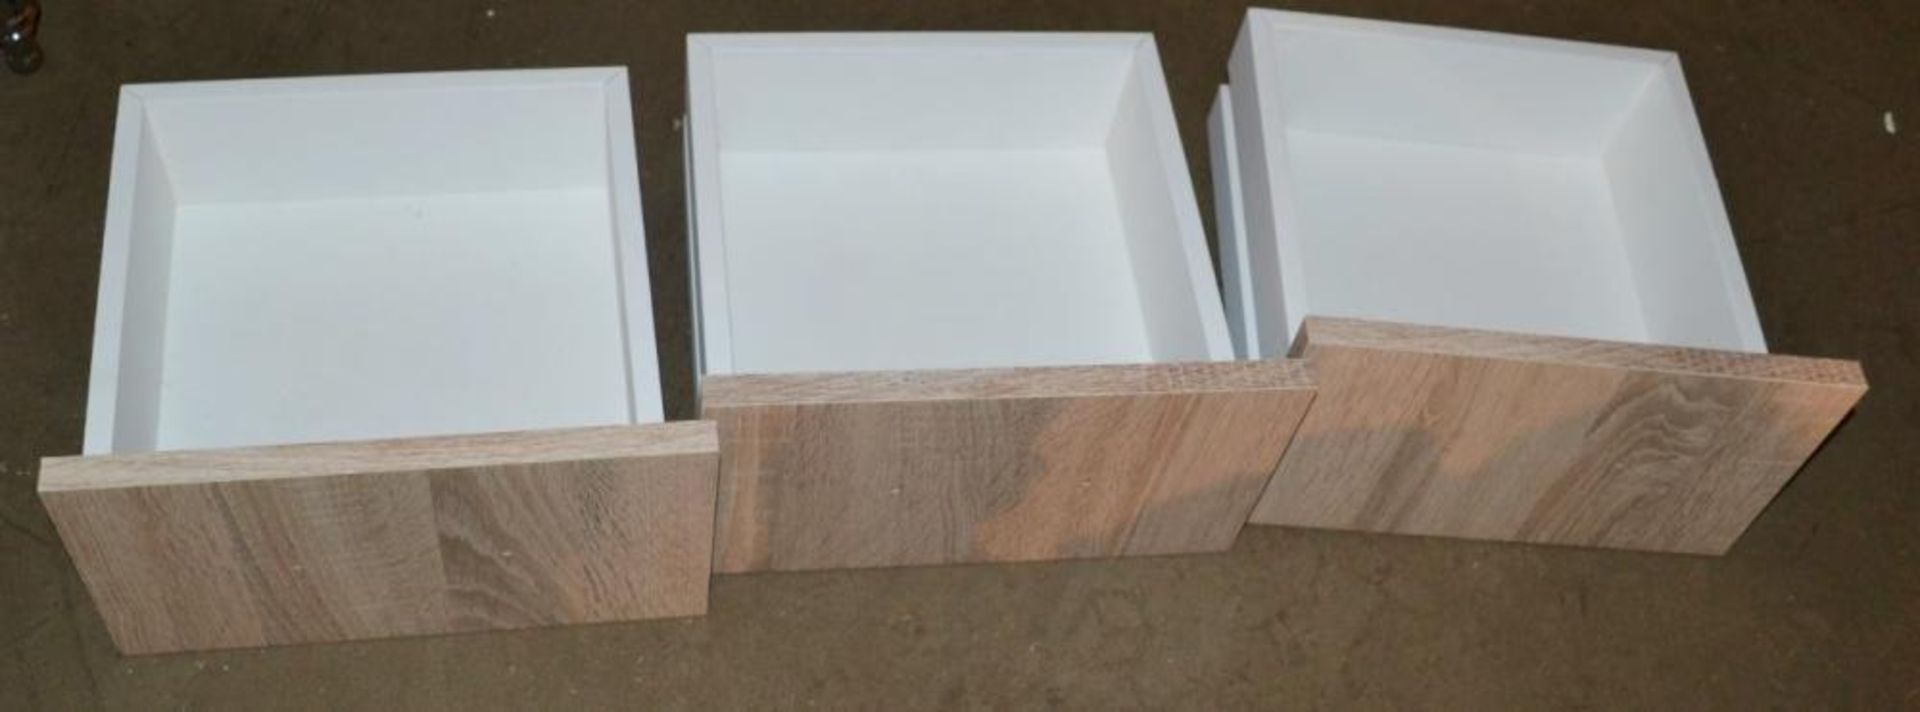 1 x Sienna Oak 1200mm Unit (FRDD1201) - Dimensions: 120 x 40 x H79cm - New / Unused Stock - Ref: MT9 - Image 2 of 7